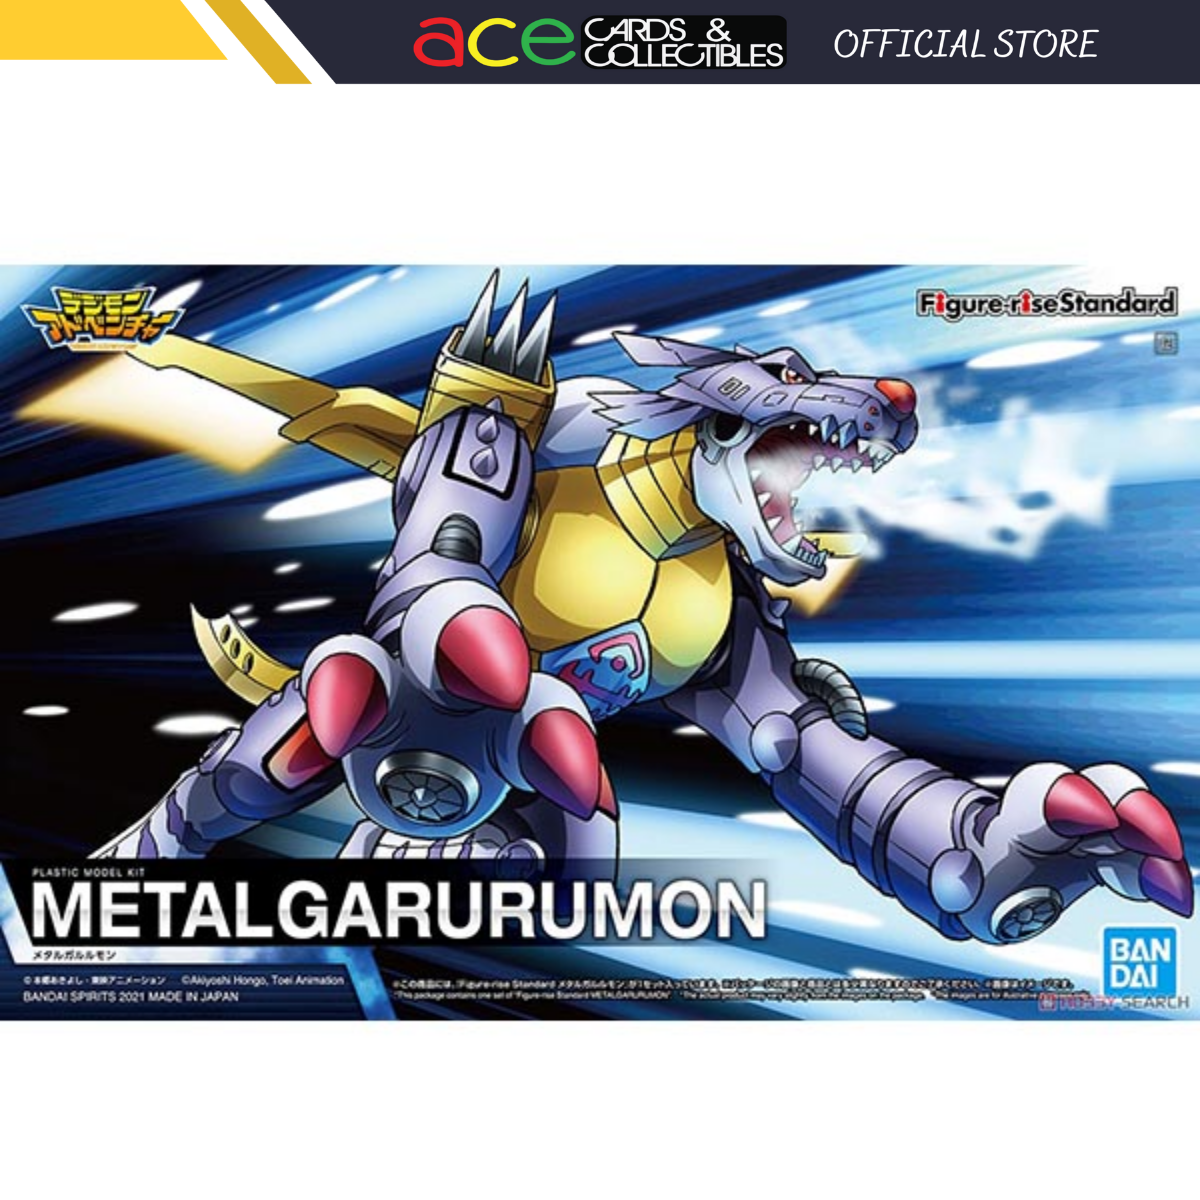 Digimon Figure-rise Standard Metal Garurumon-Bandai-Ace Cards & Collectibles